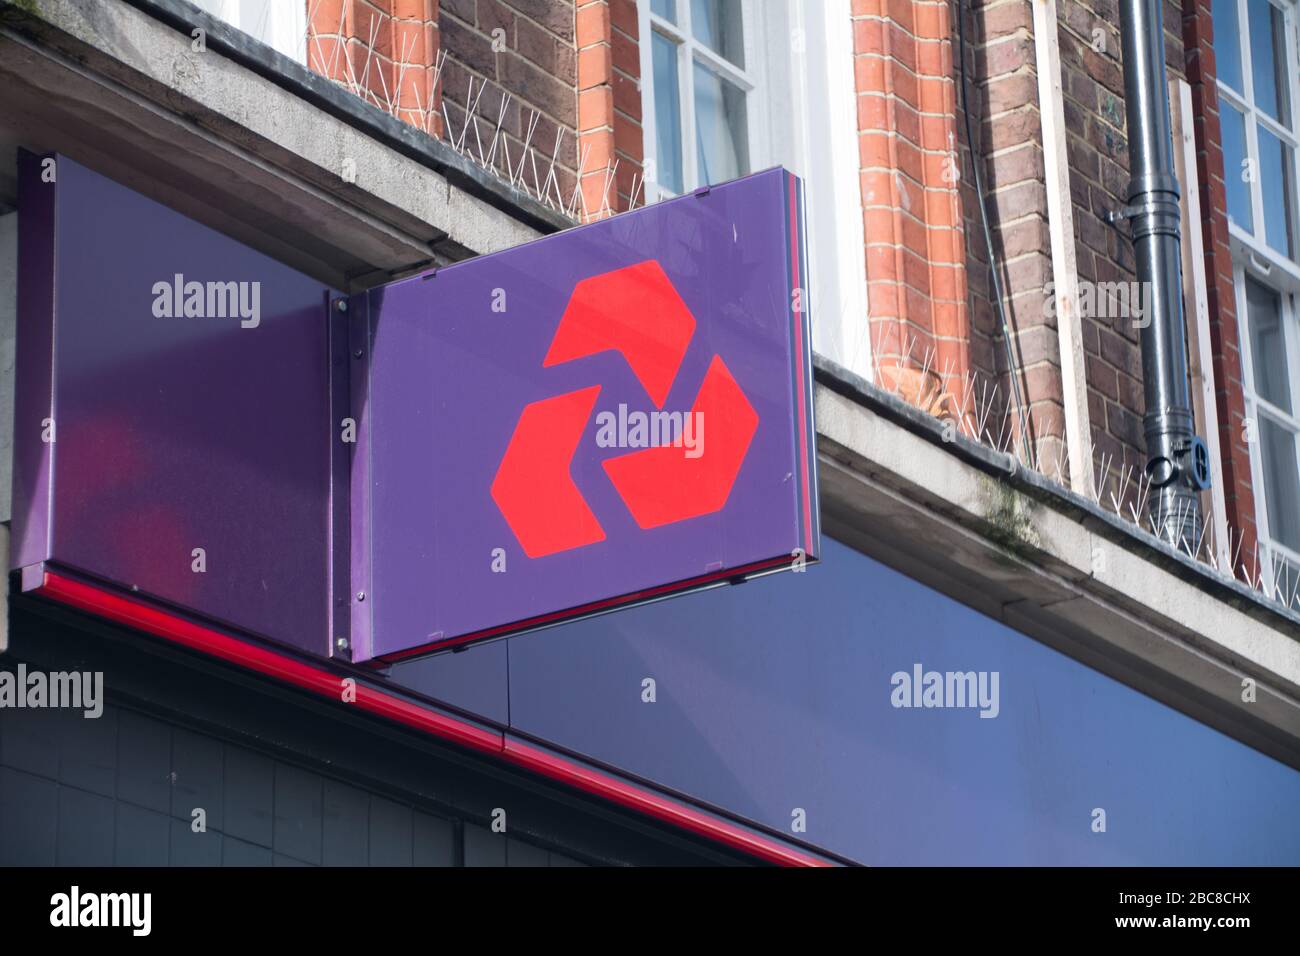 NatWest- filiale britannica hgih Street bank, logo esterno / segnaletica- Londra Foto Stock